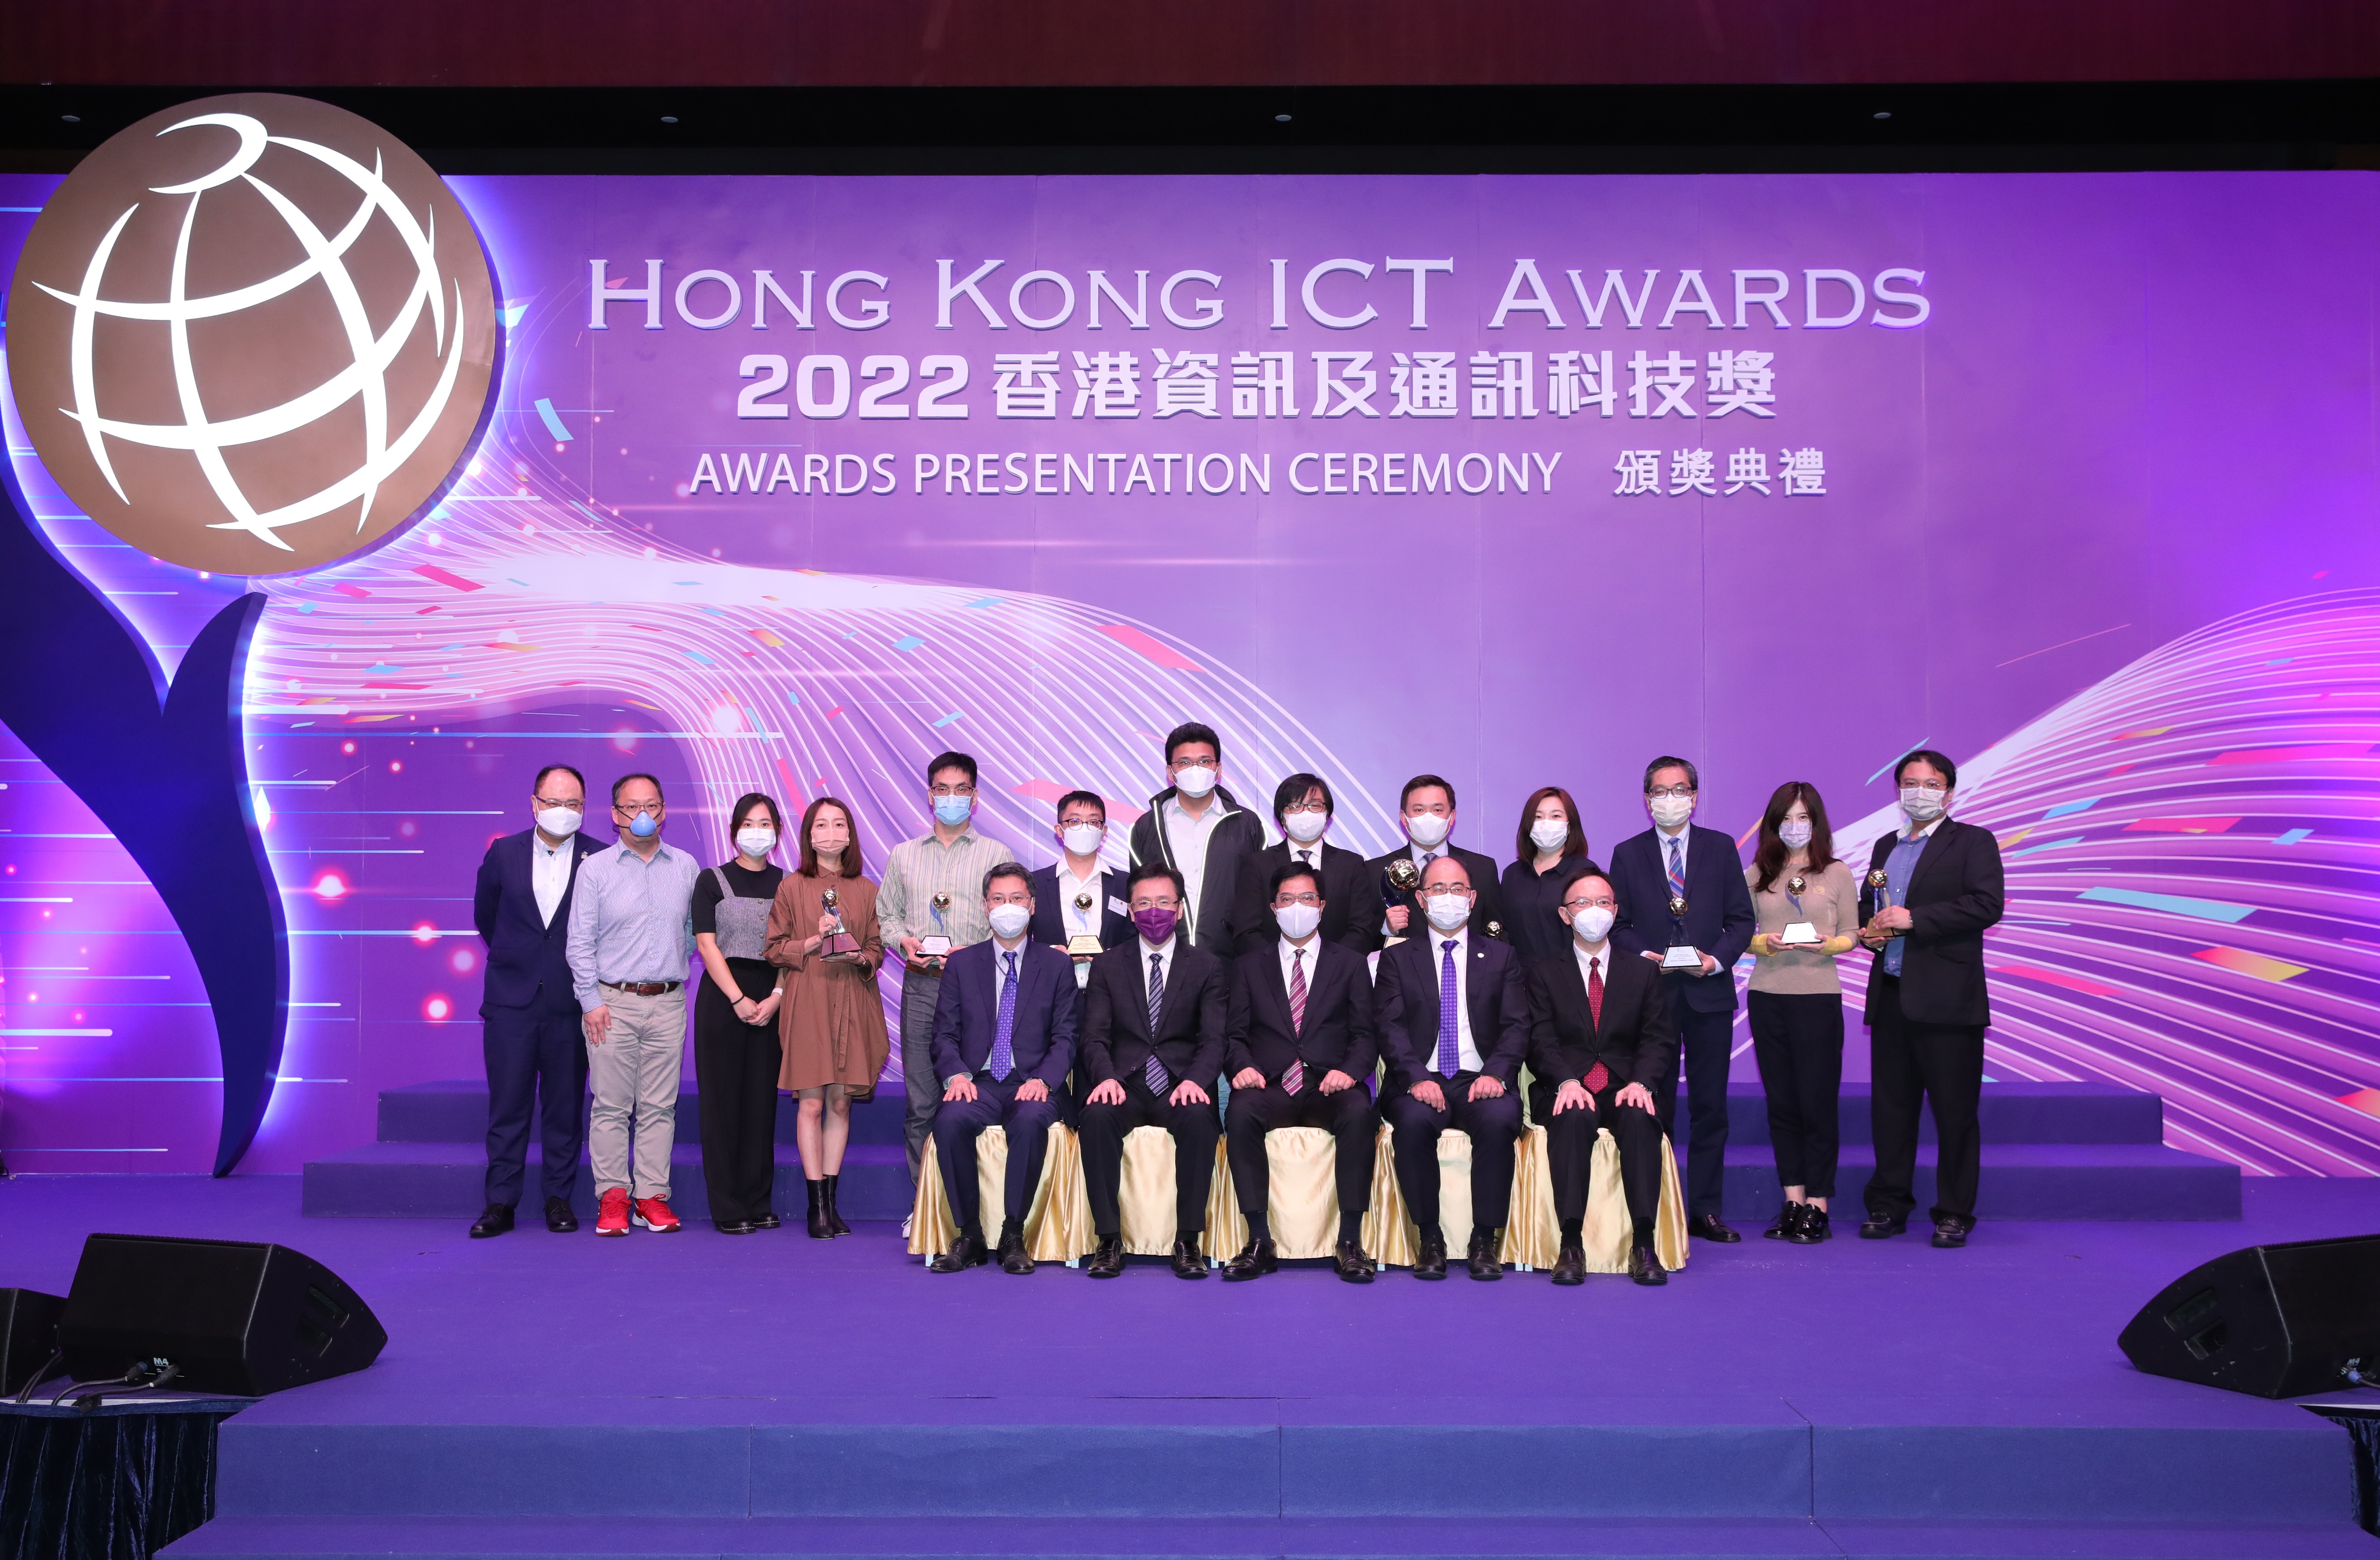 Hong Kong ICT Awards 2022 Digital Entertainment Award Winners Group Photo